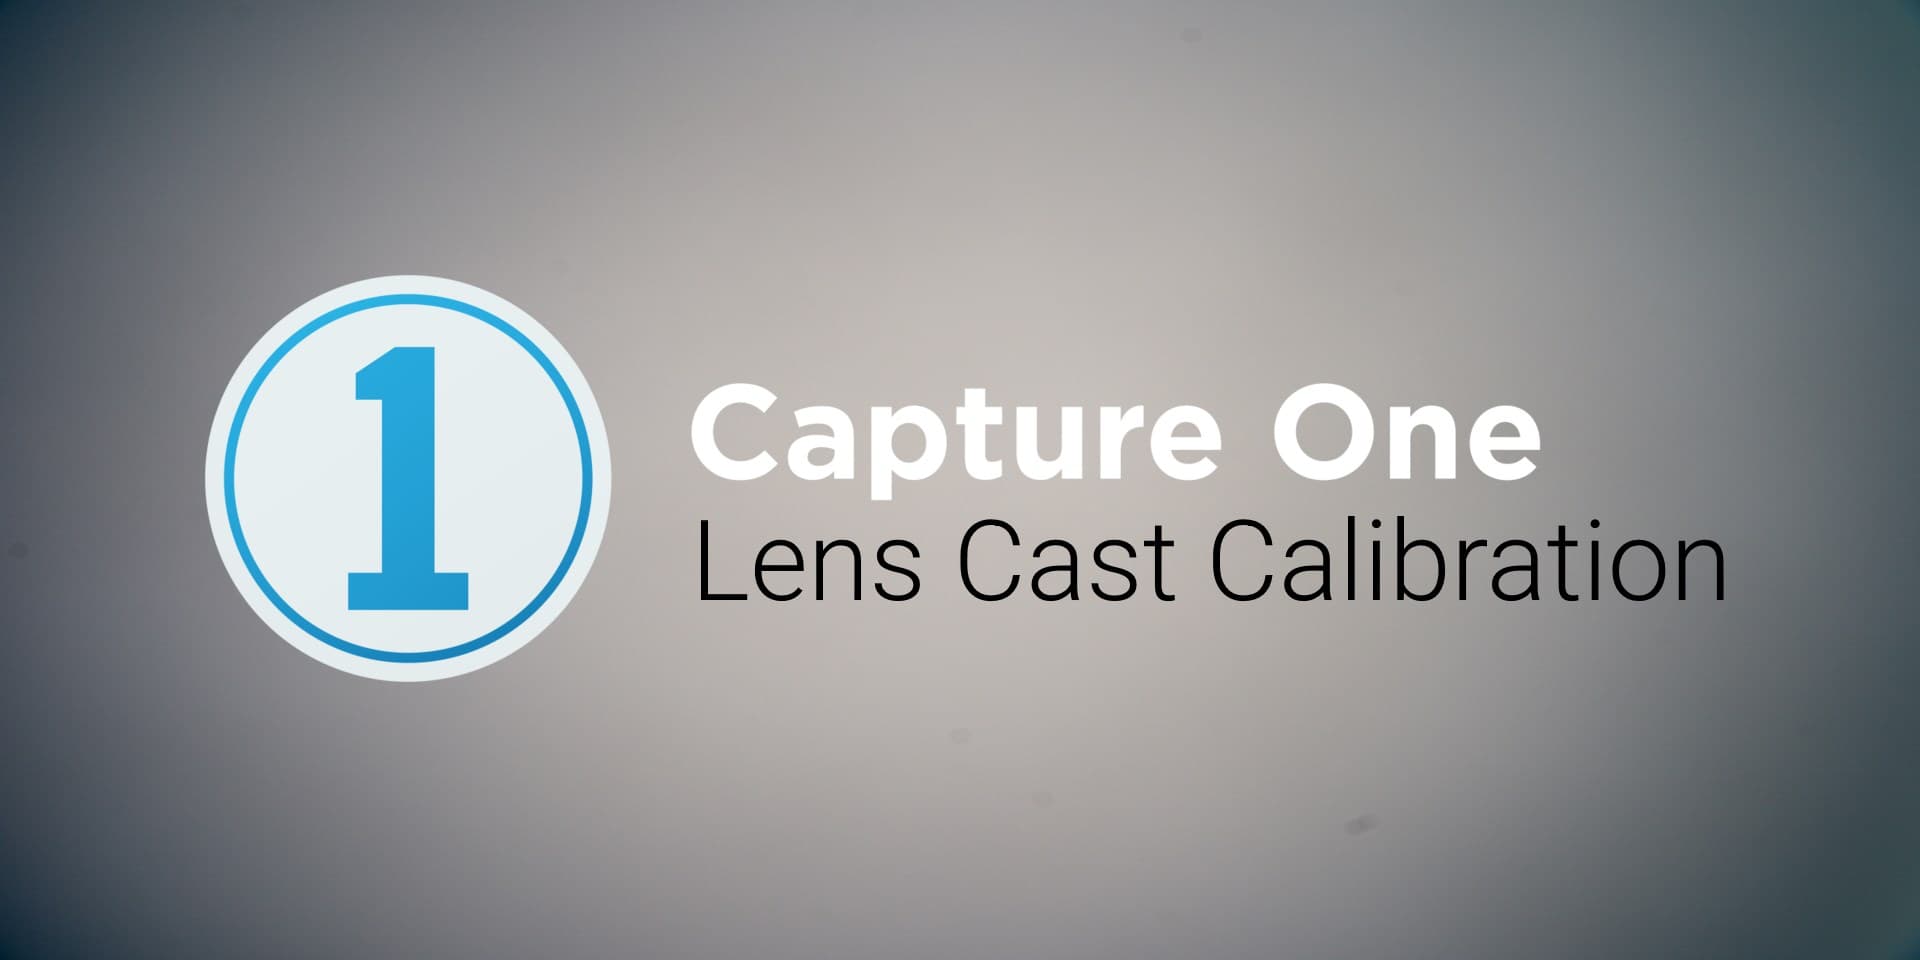 Lens Cast Calibration in Capture One